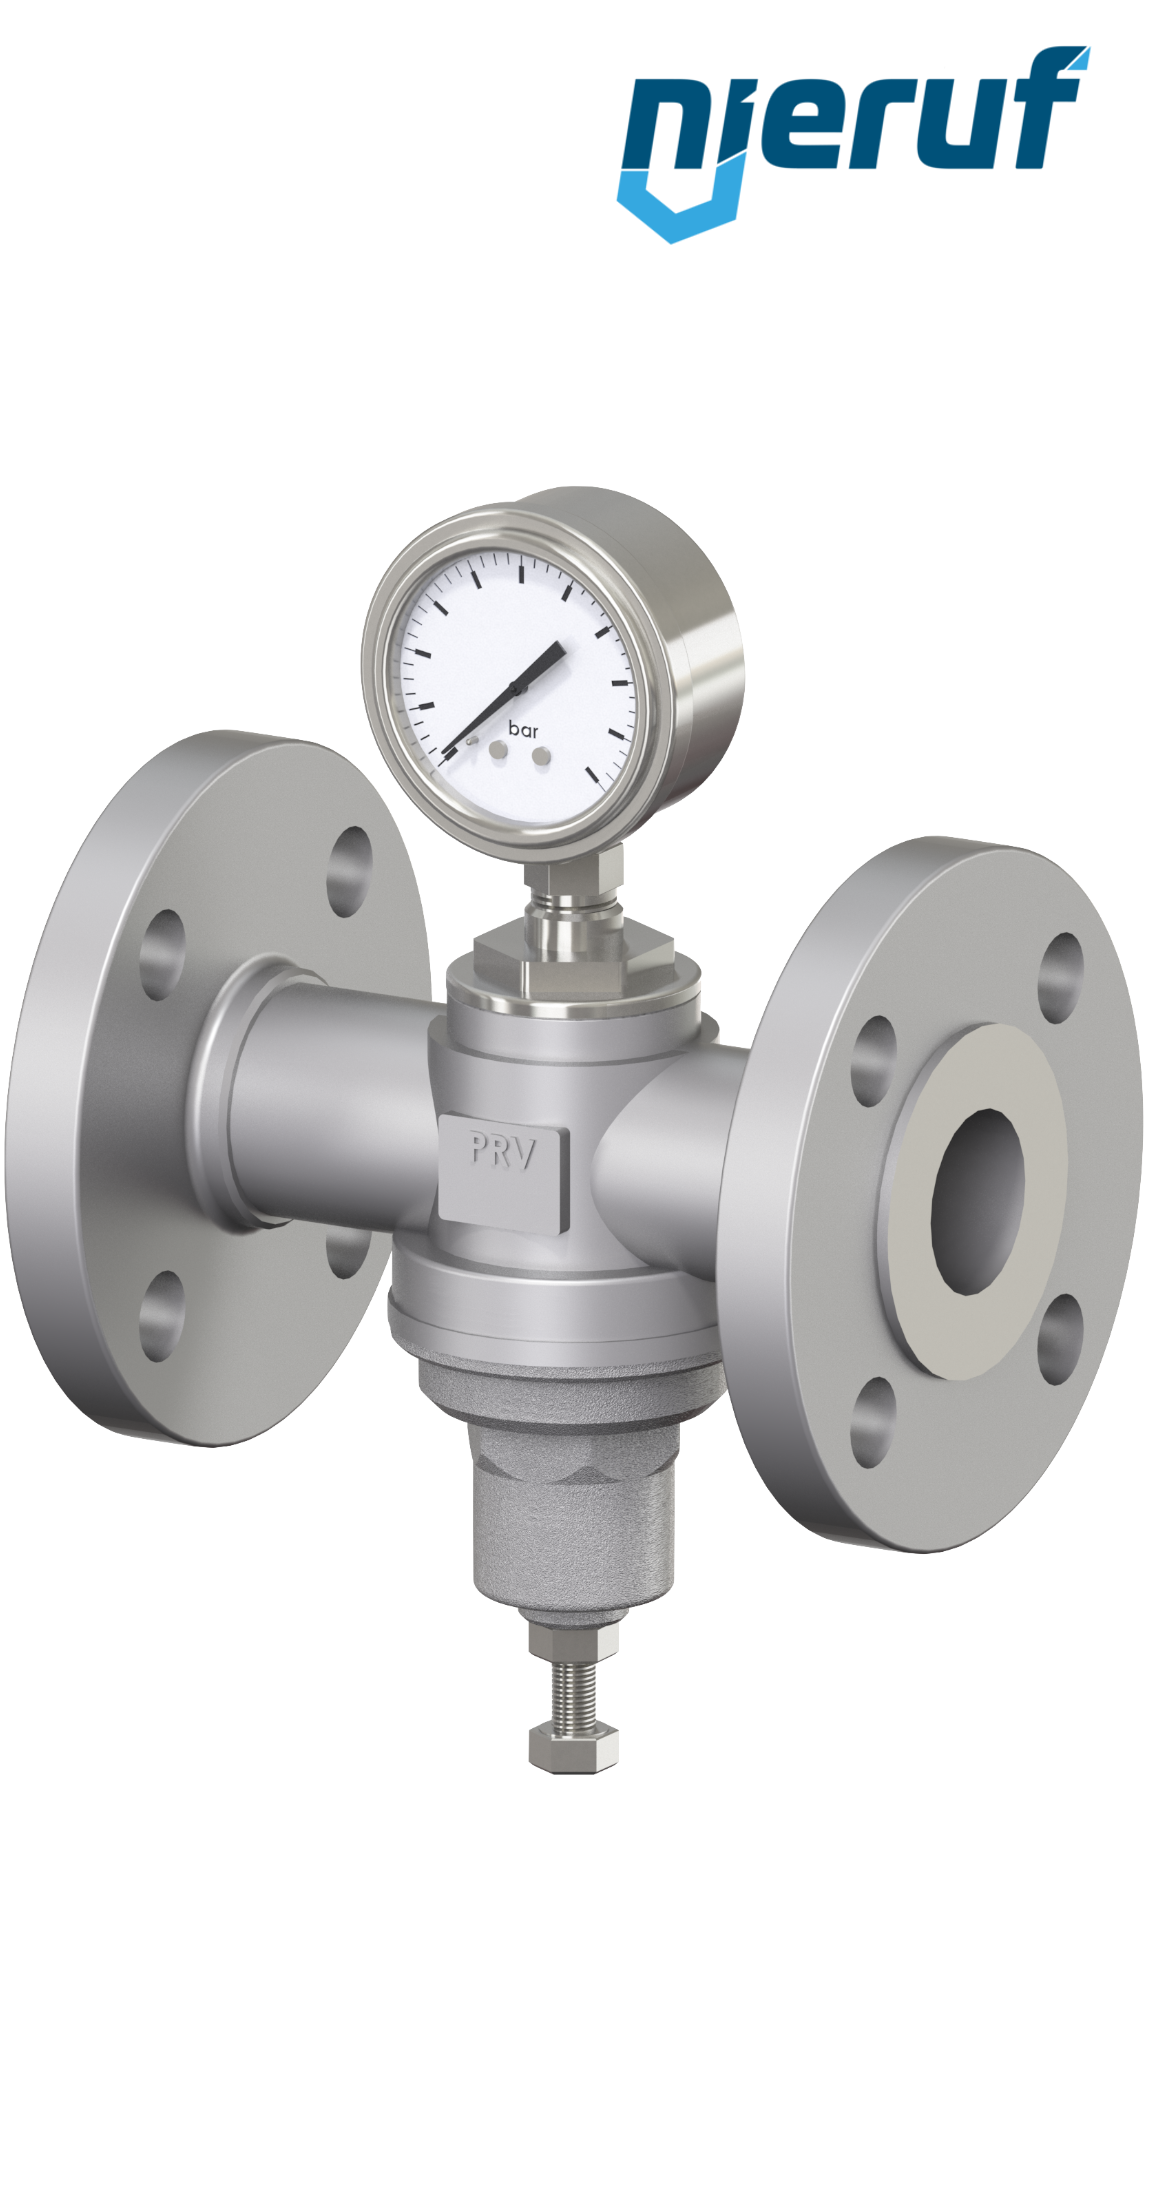 steam pressure reducing valve DN25 DM18 stainless steel 1.4408 1.0 - 6.0 bar